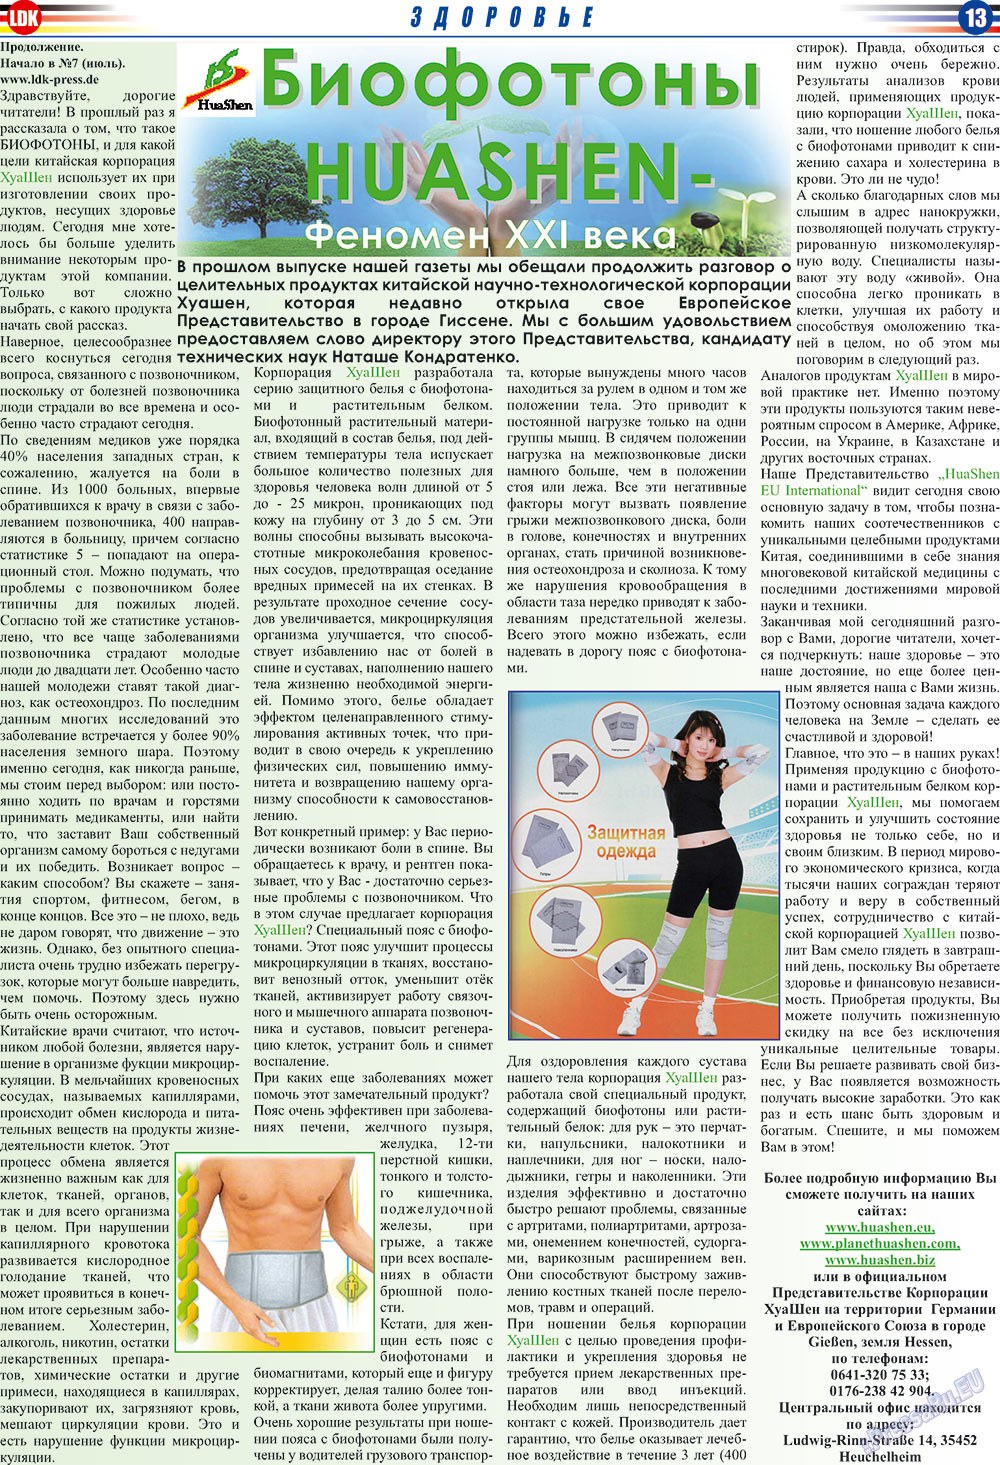 LDK по-русски, газета. 2009 №8 стр.13